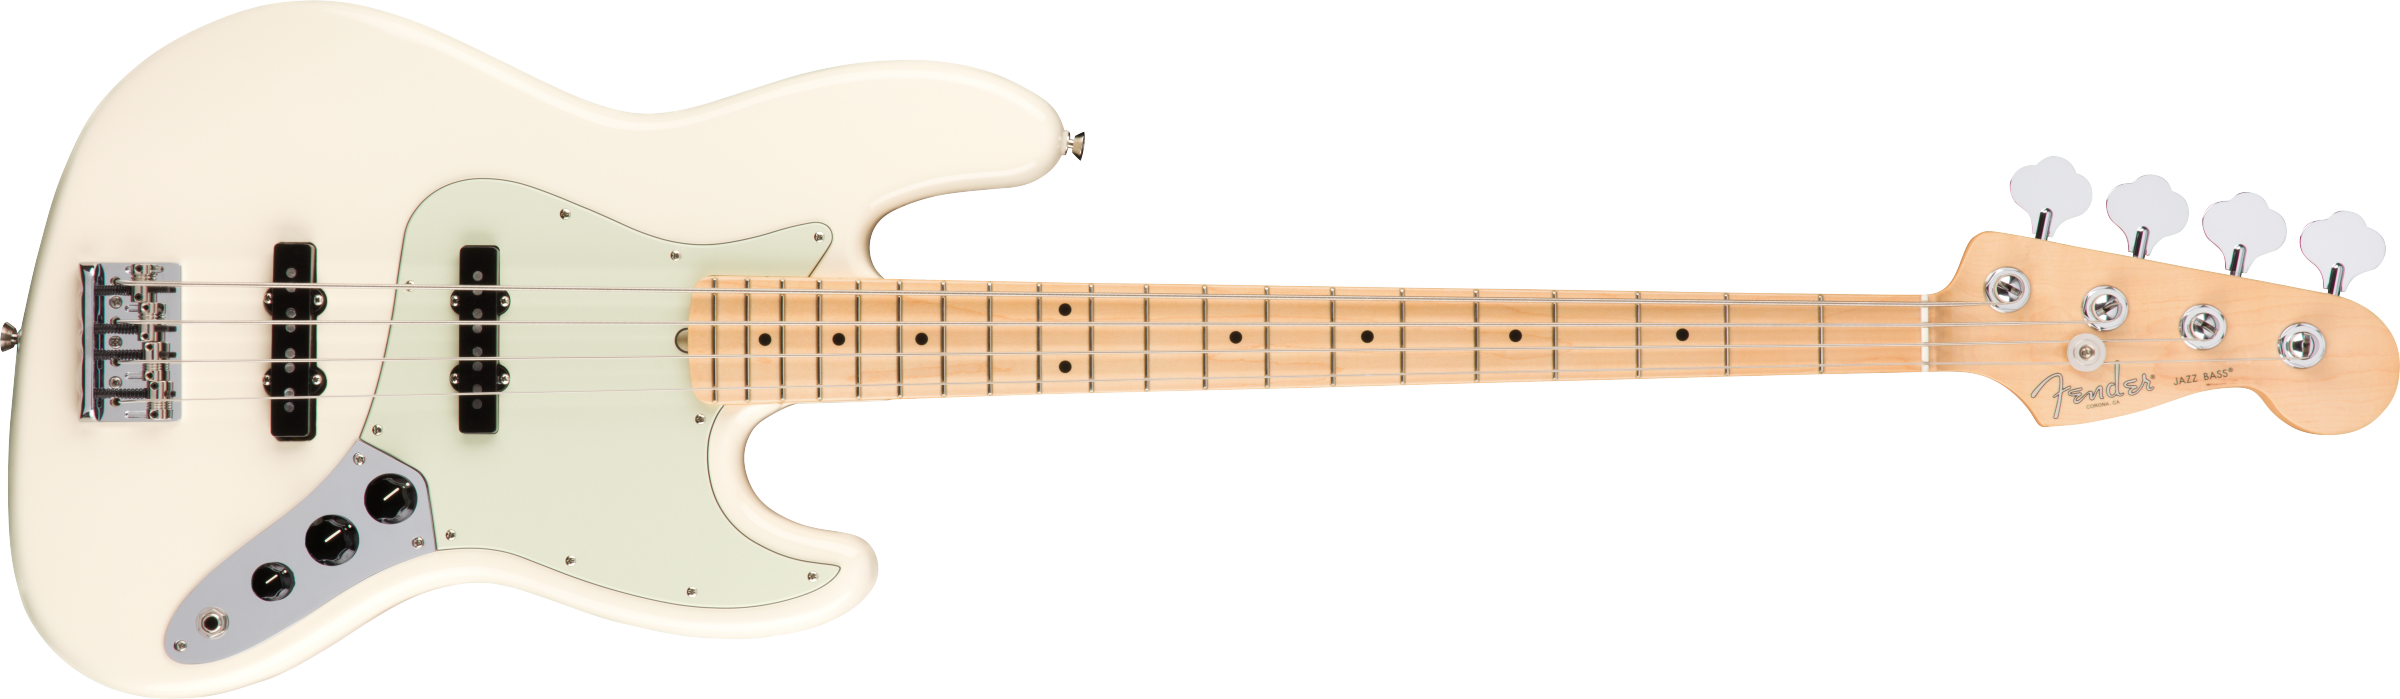 Fender® American Pro Jazz Bass®, Maple Fingerboard, Olympic White